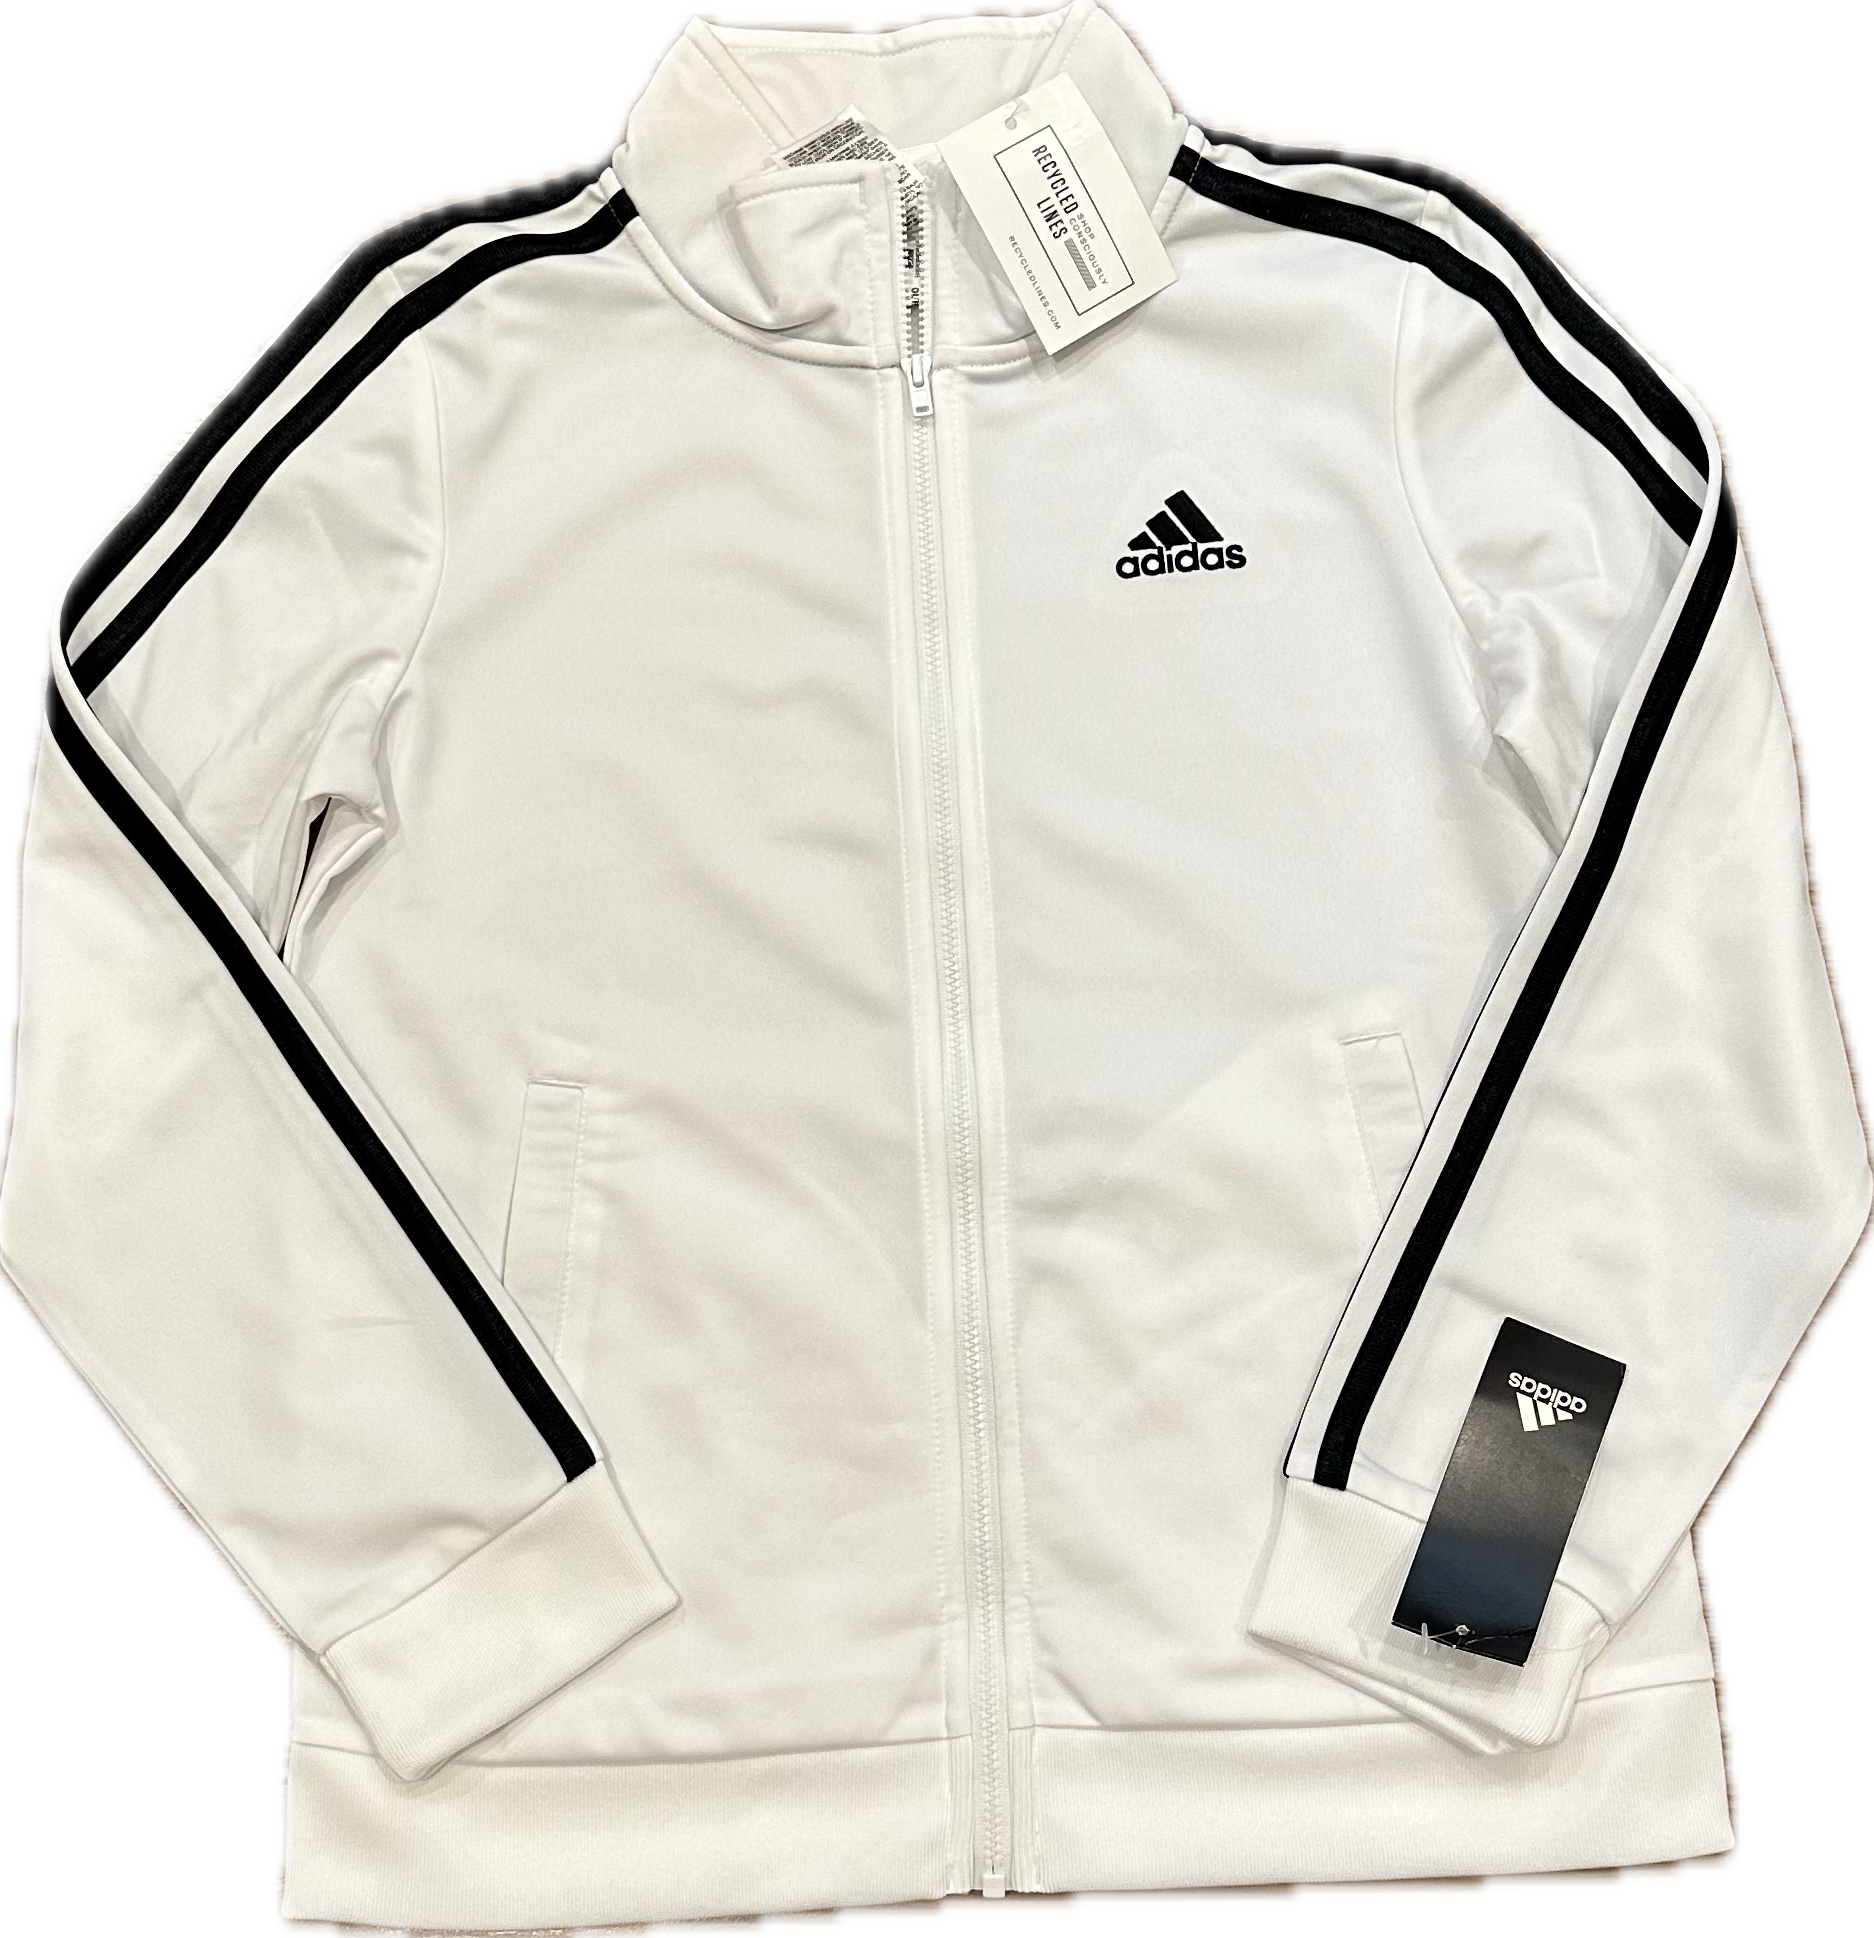 Adidas NWT Zip Up Sweatshirt, White Boys M (10/12)